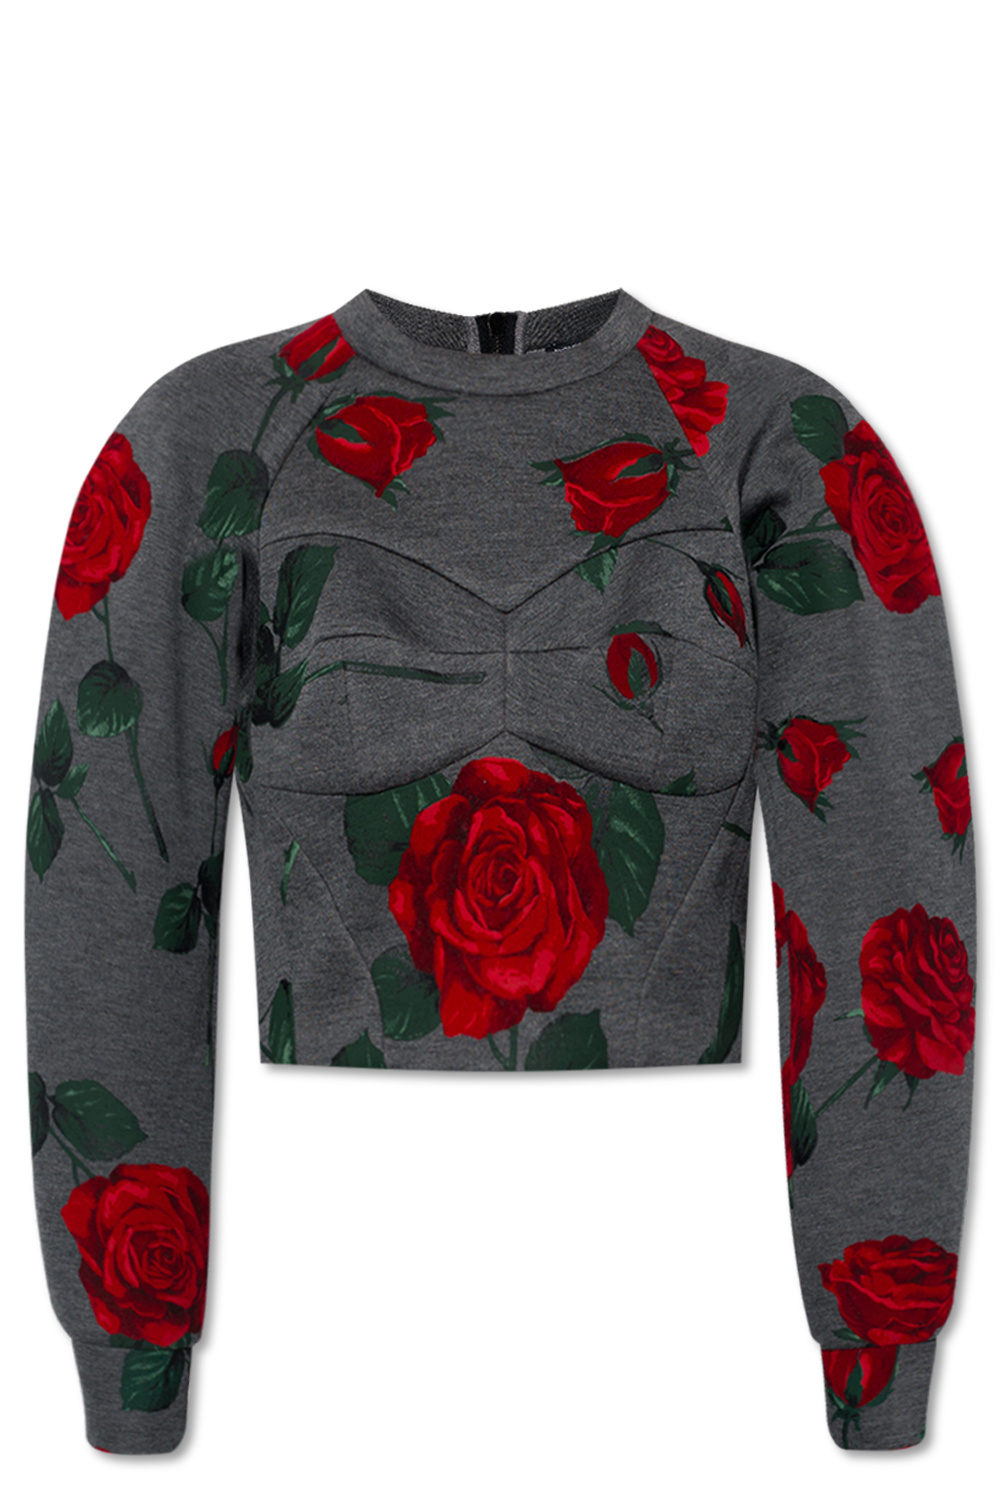 Dolce & Gabbana Sweatshirt with floral-motif